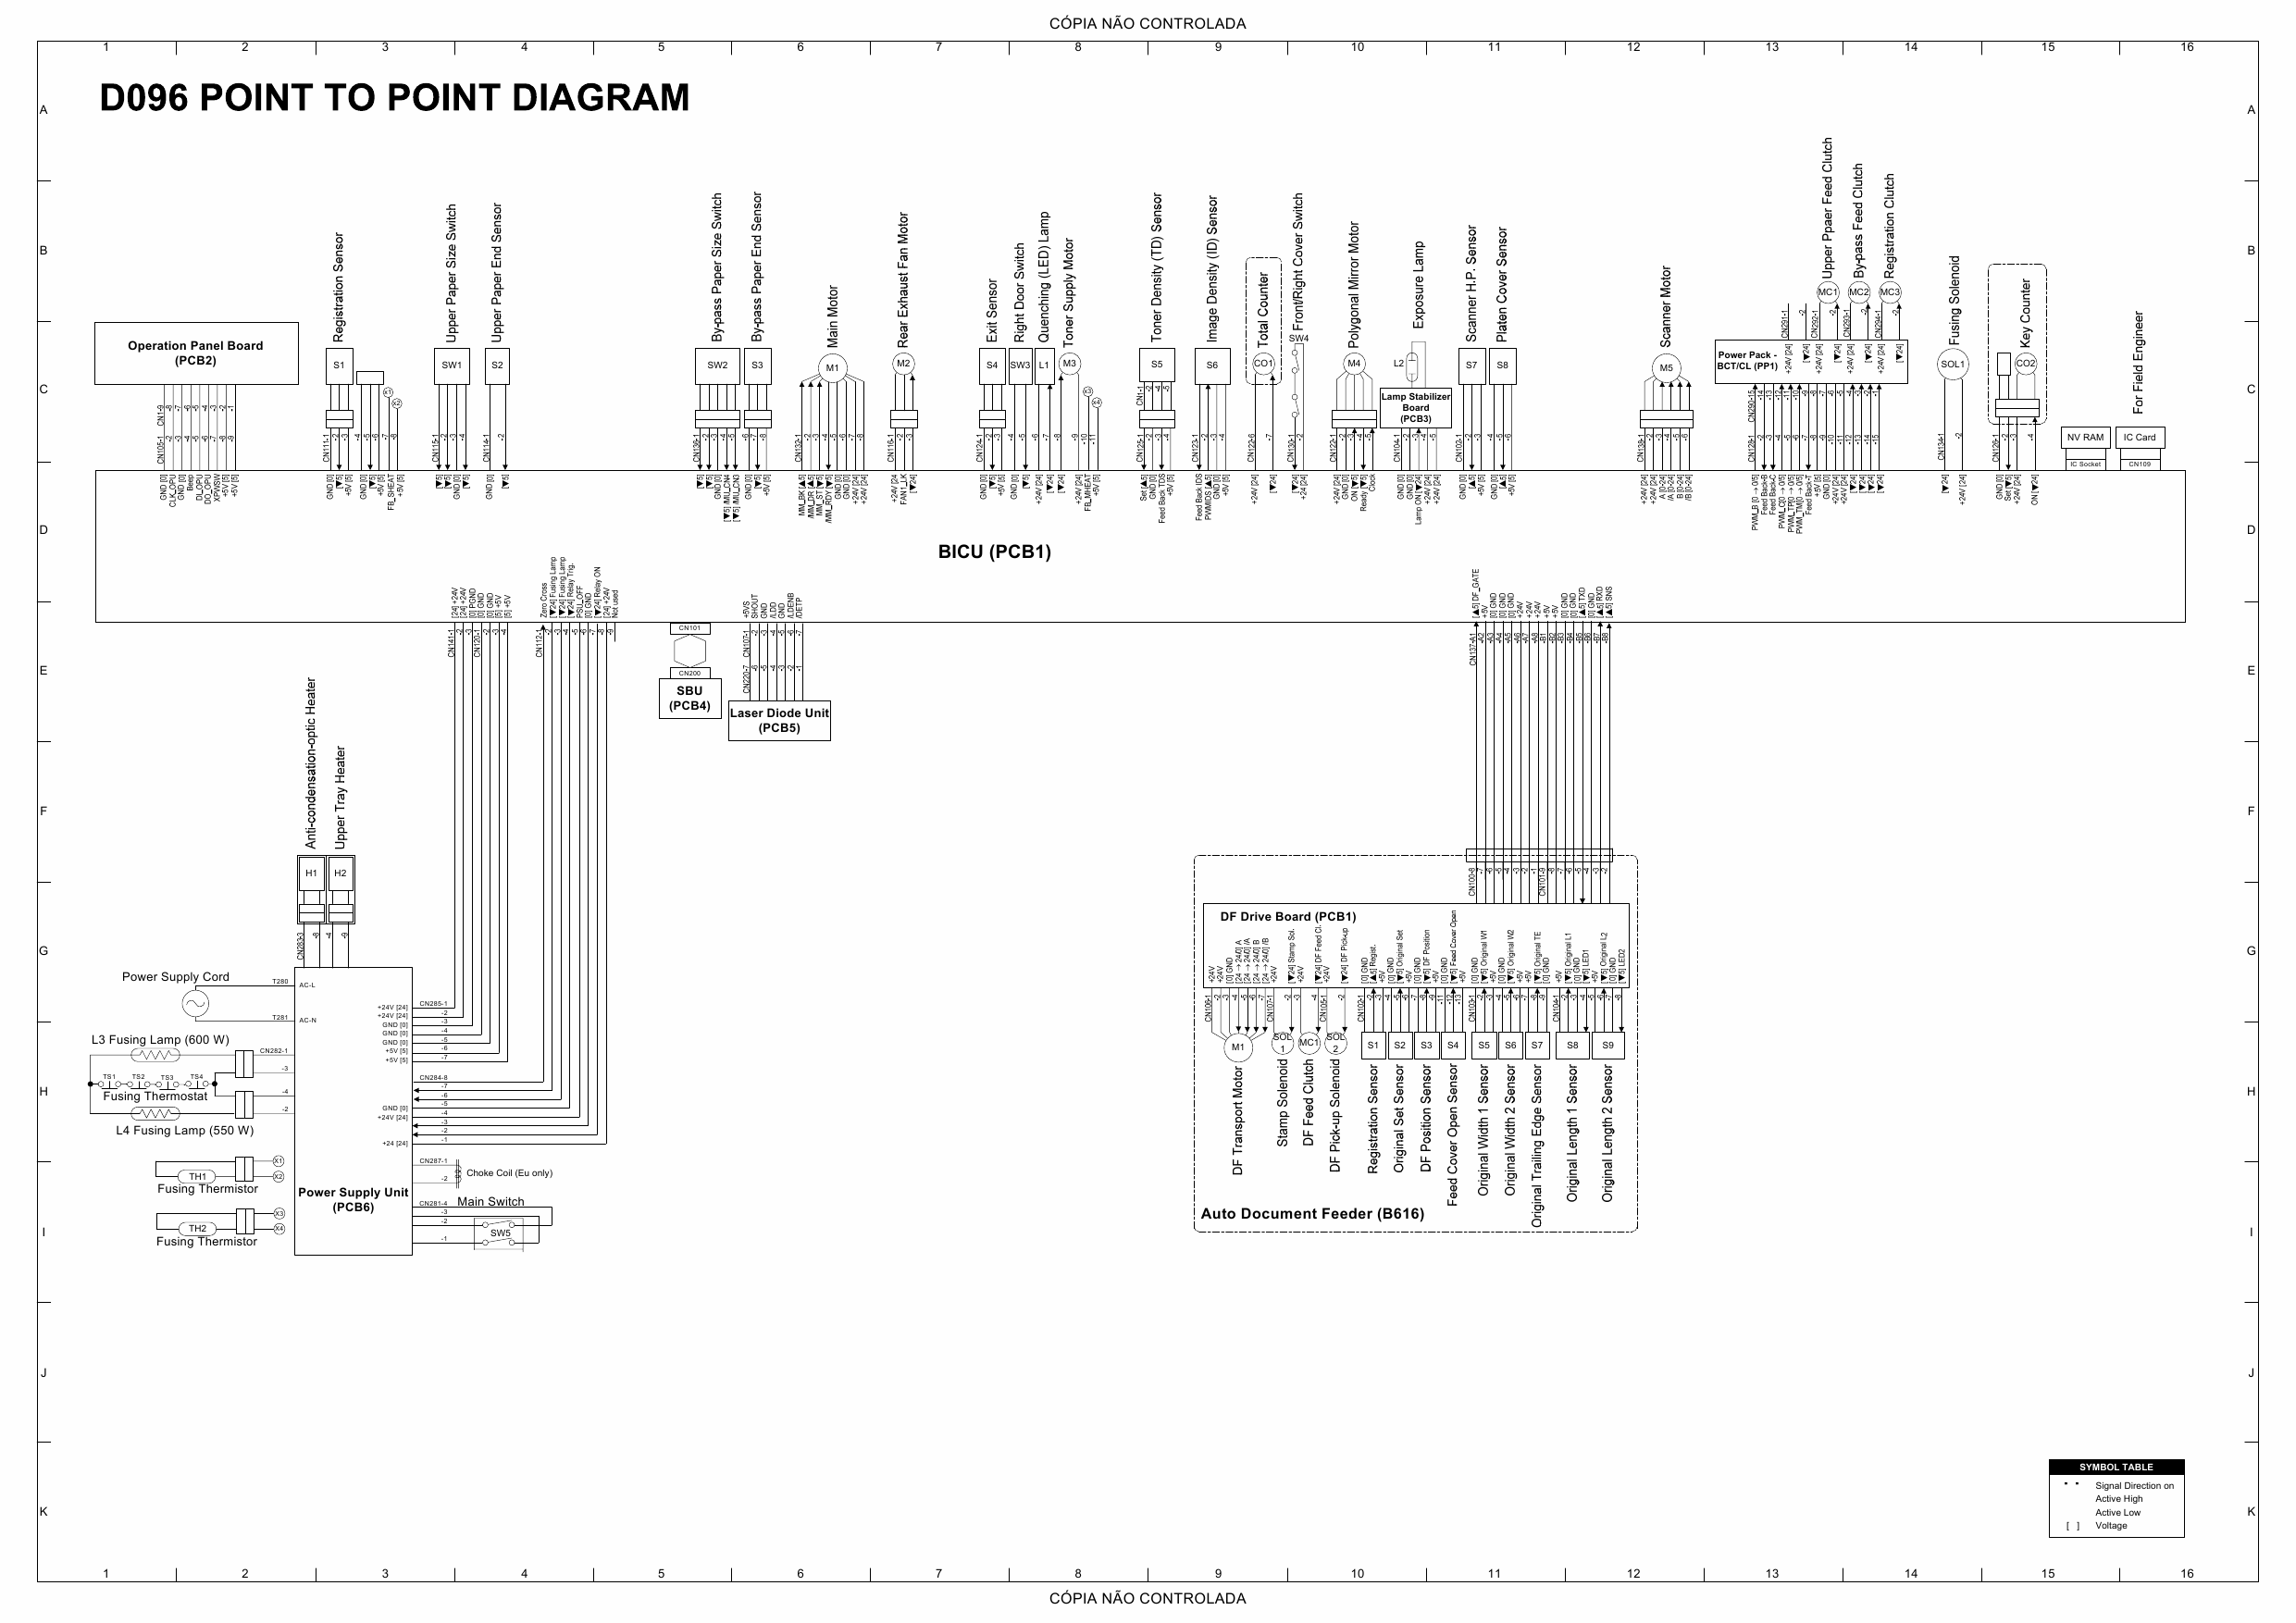 RICOH Aficio MP-1900 D096 Circuit Diagram-1